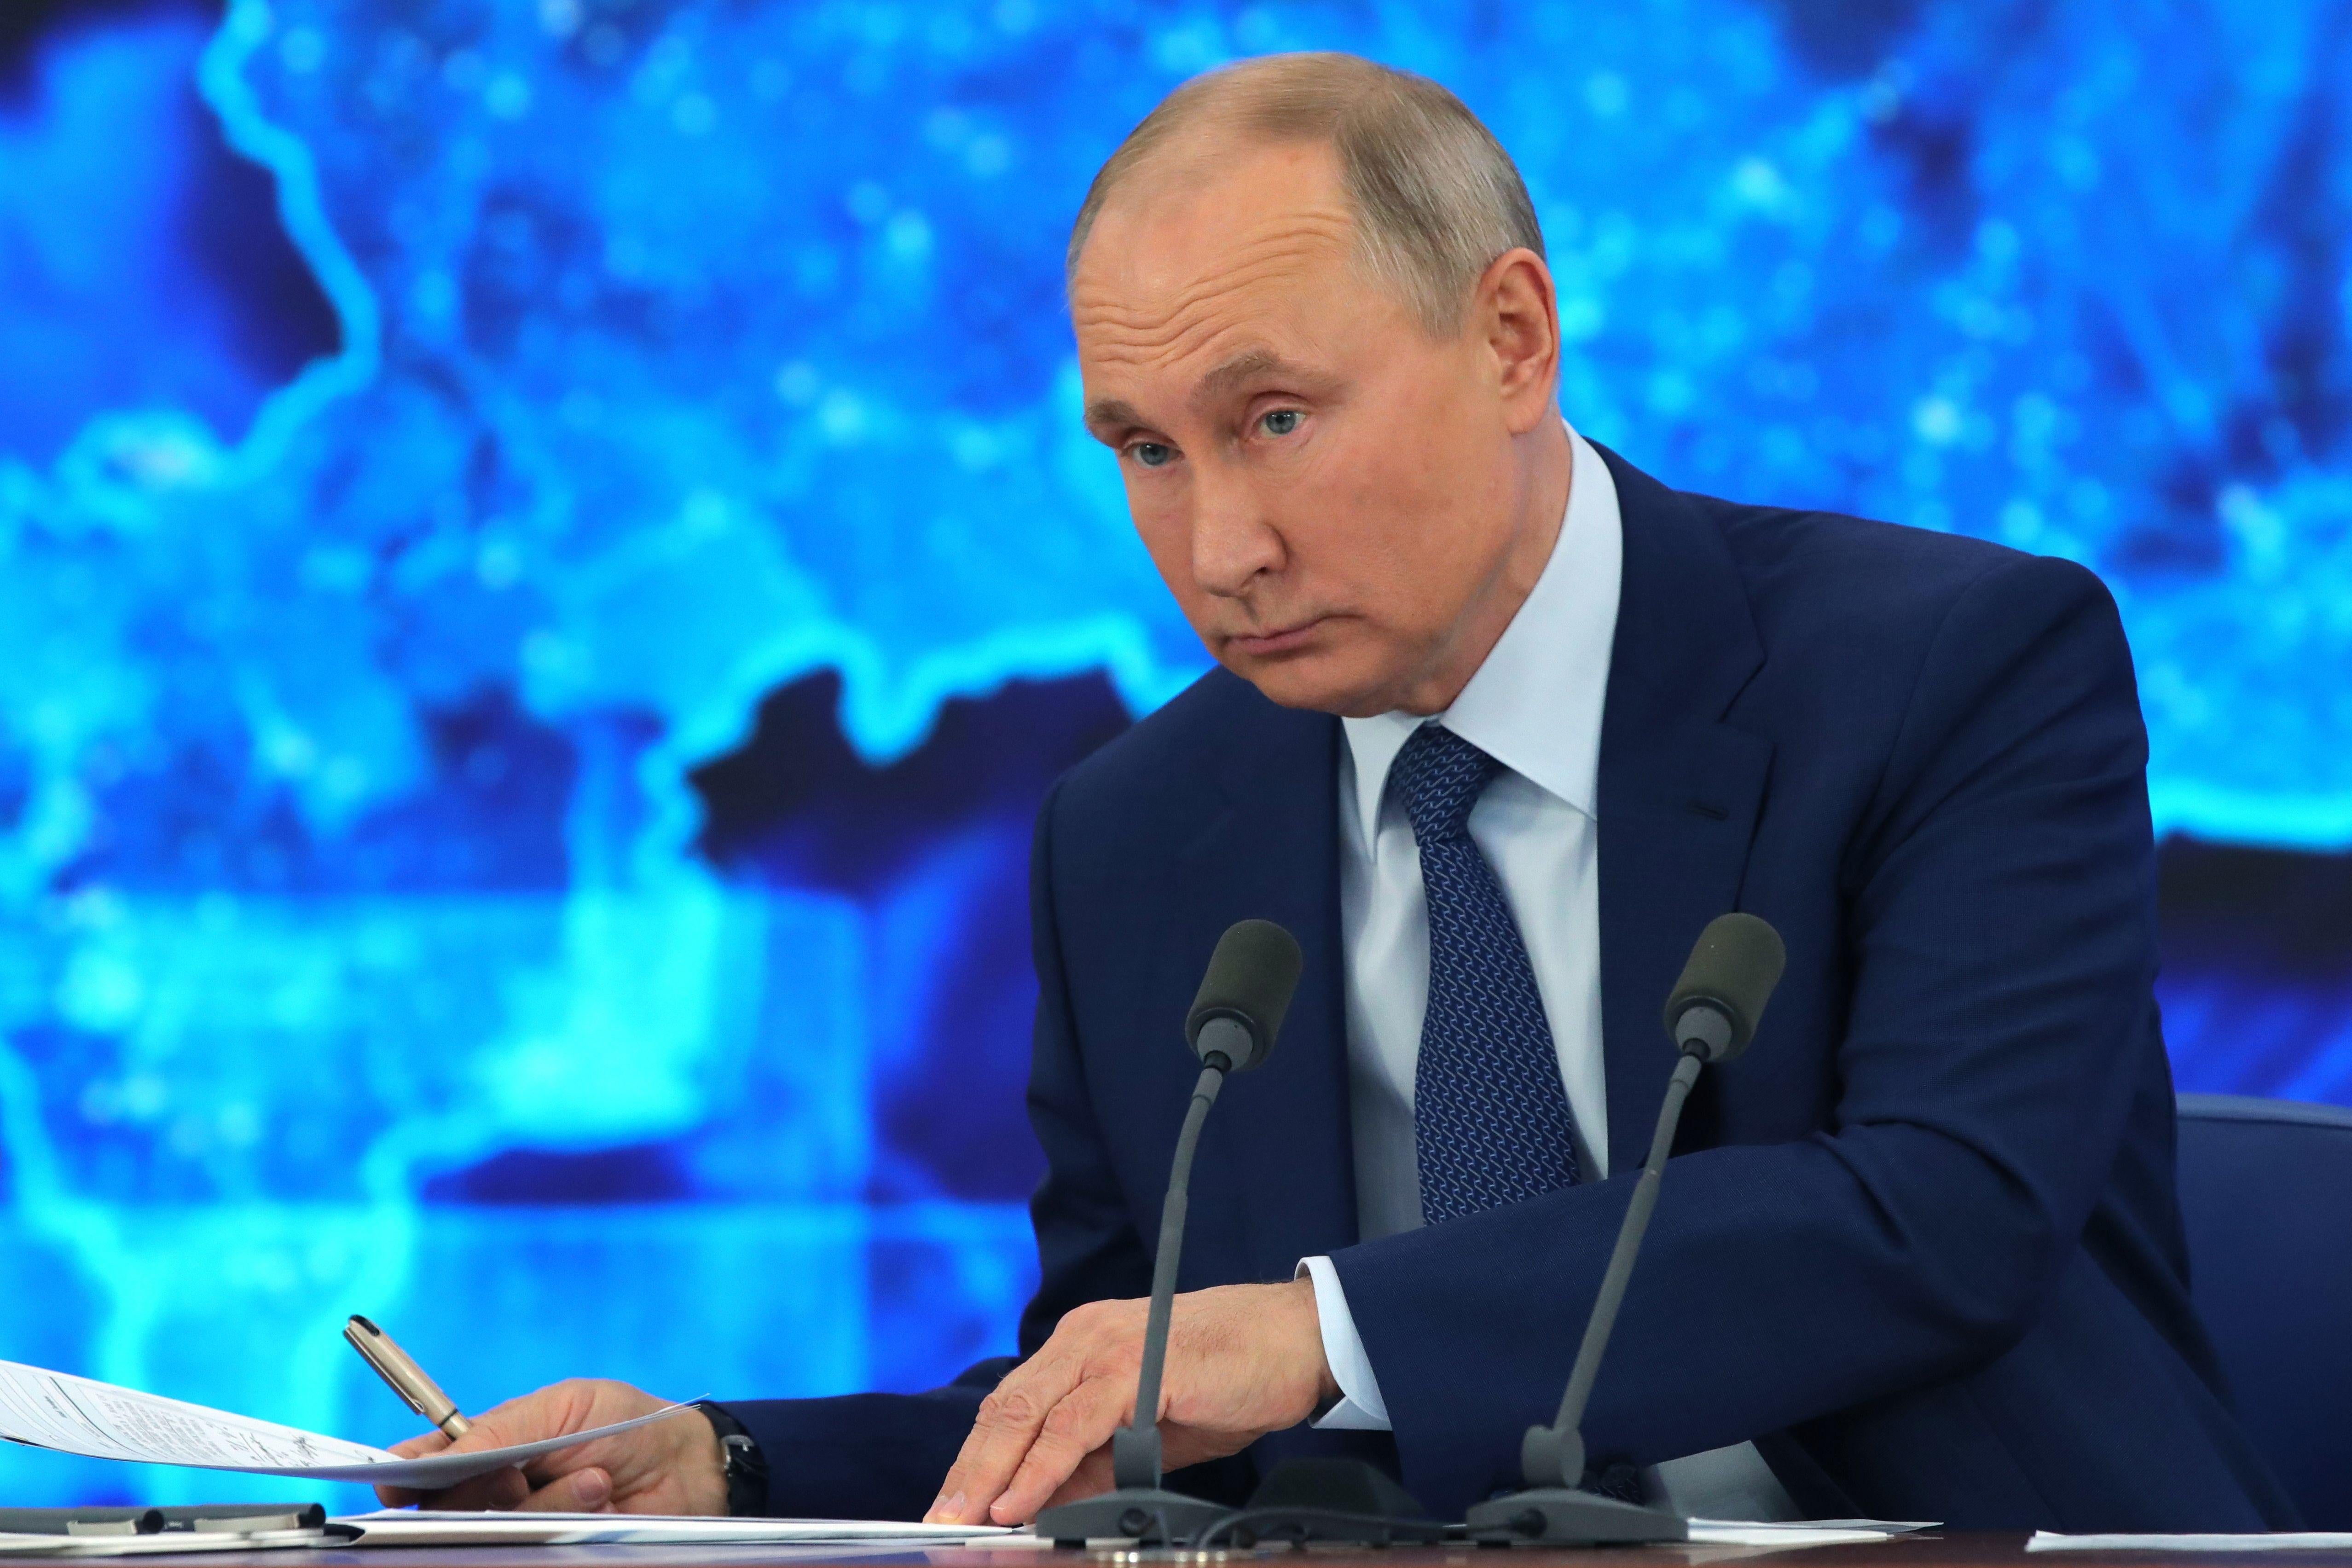 Putin at a desk, shuffling around papers.